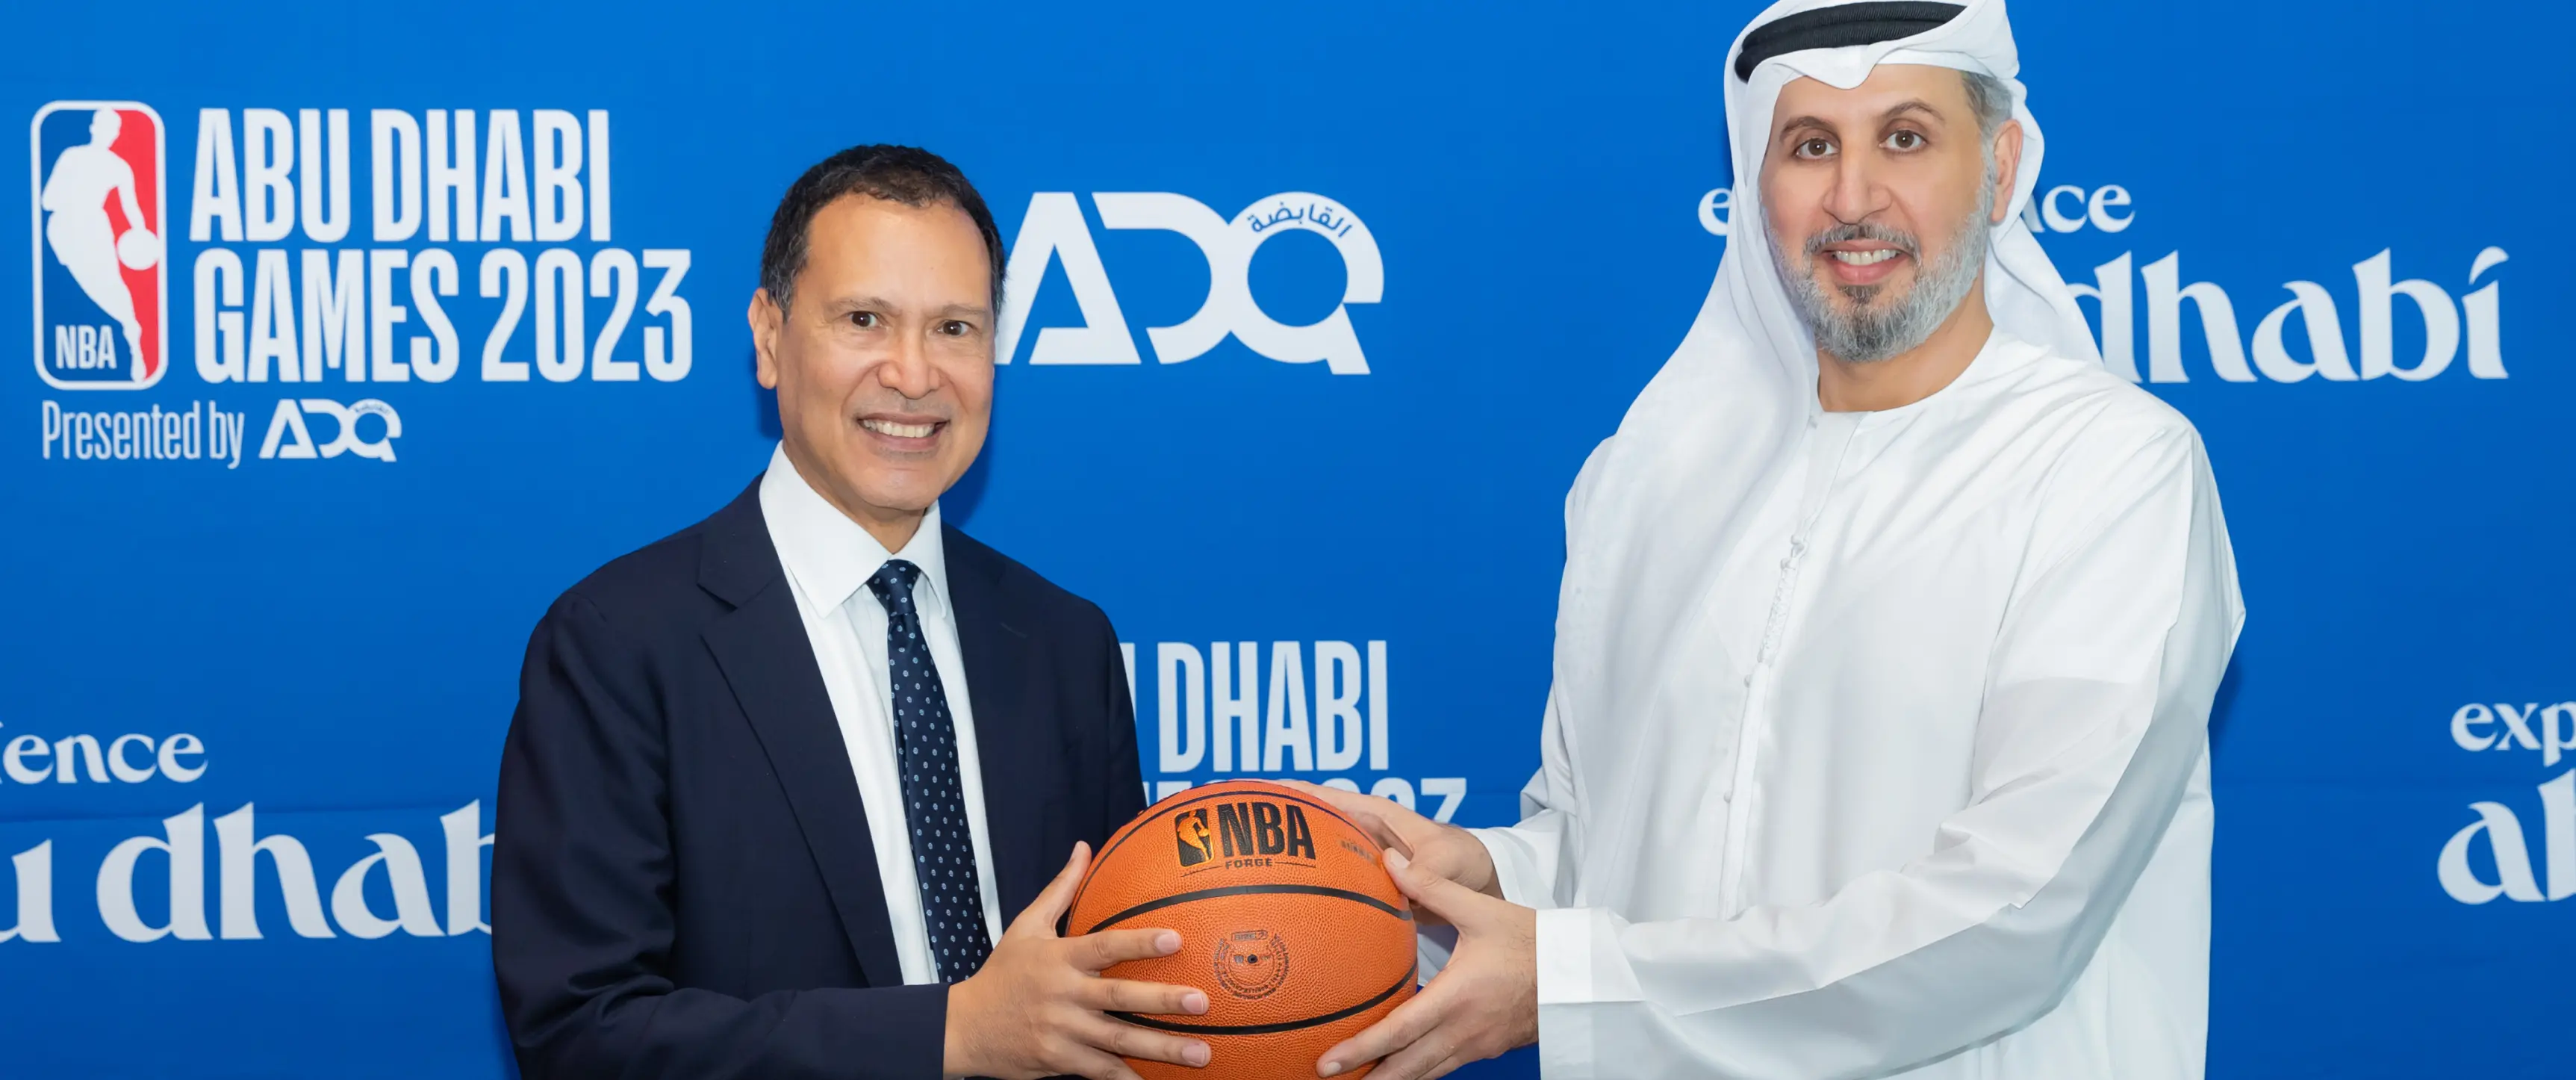 NBA Abu Dhabi Games 2023 featuring Dallas Mavericks and Minnesota